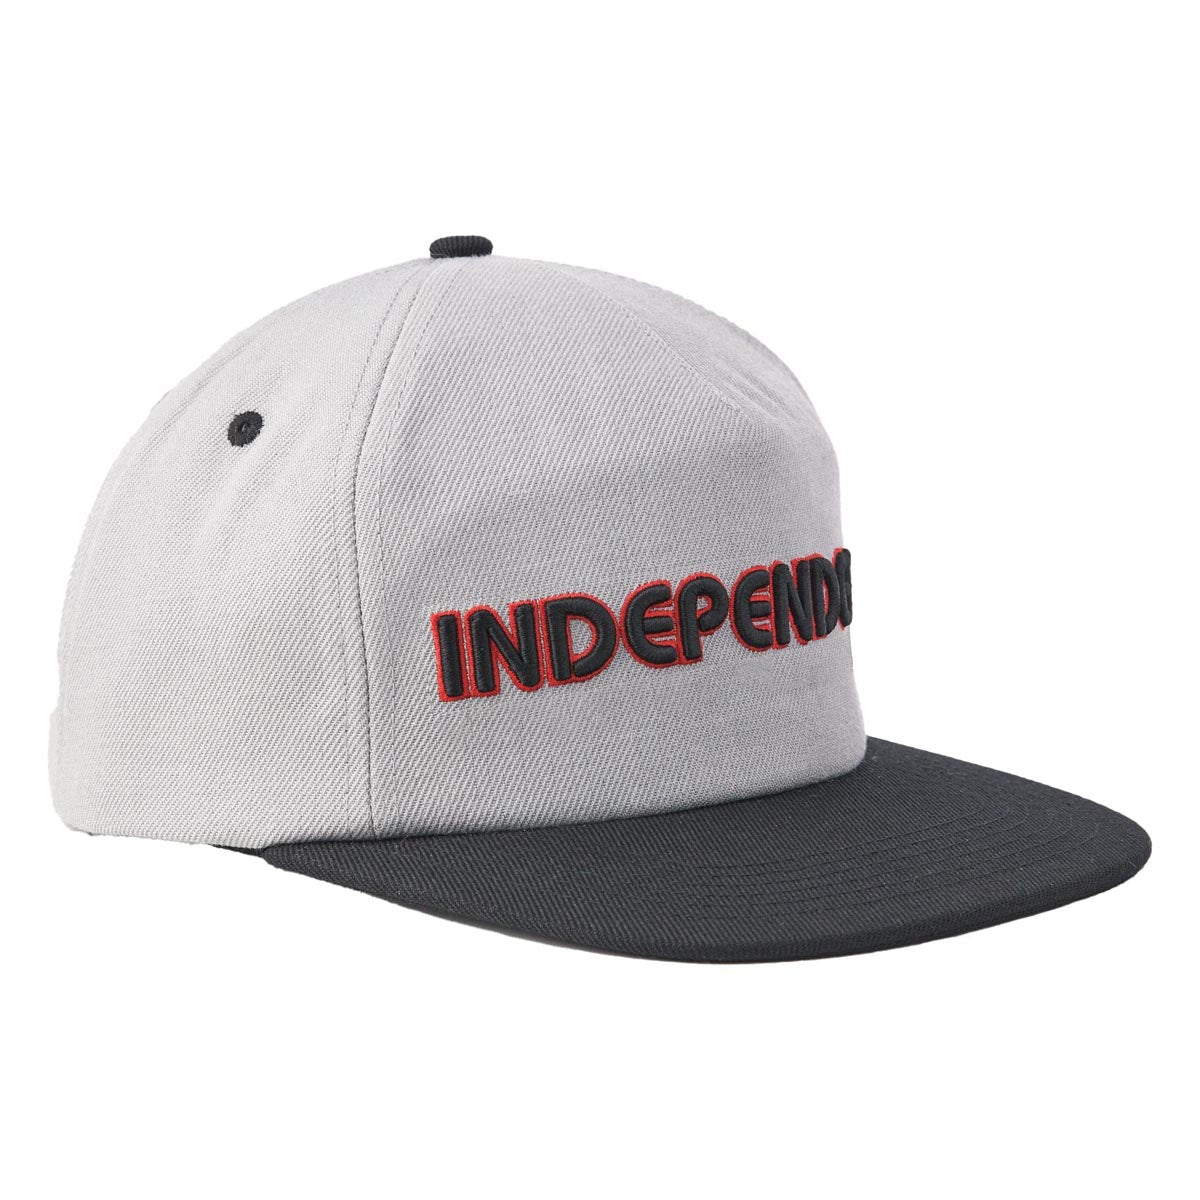 Independent Groundwork Snapback Unstructured Hat - Grey/Black image 2